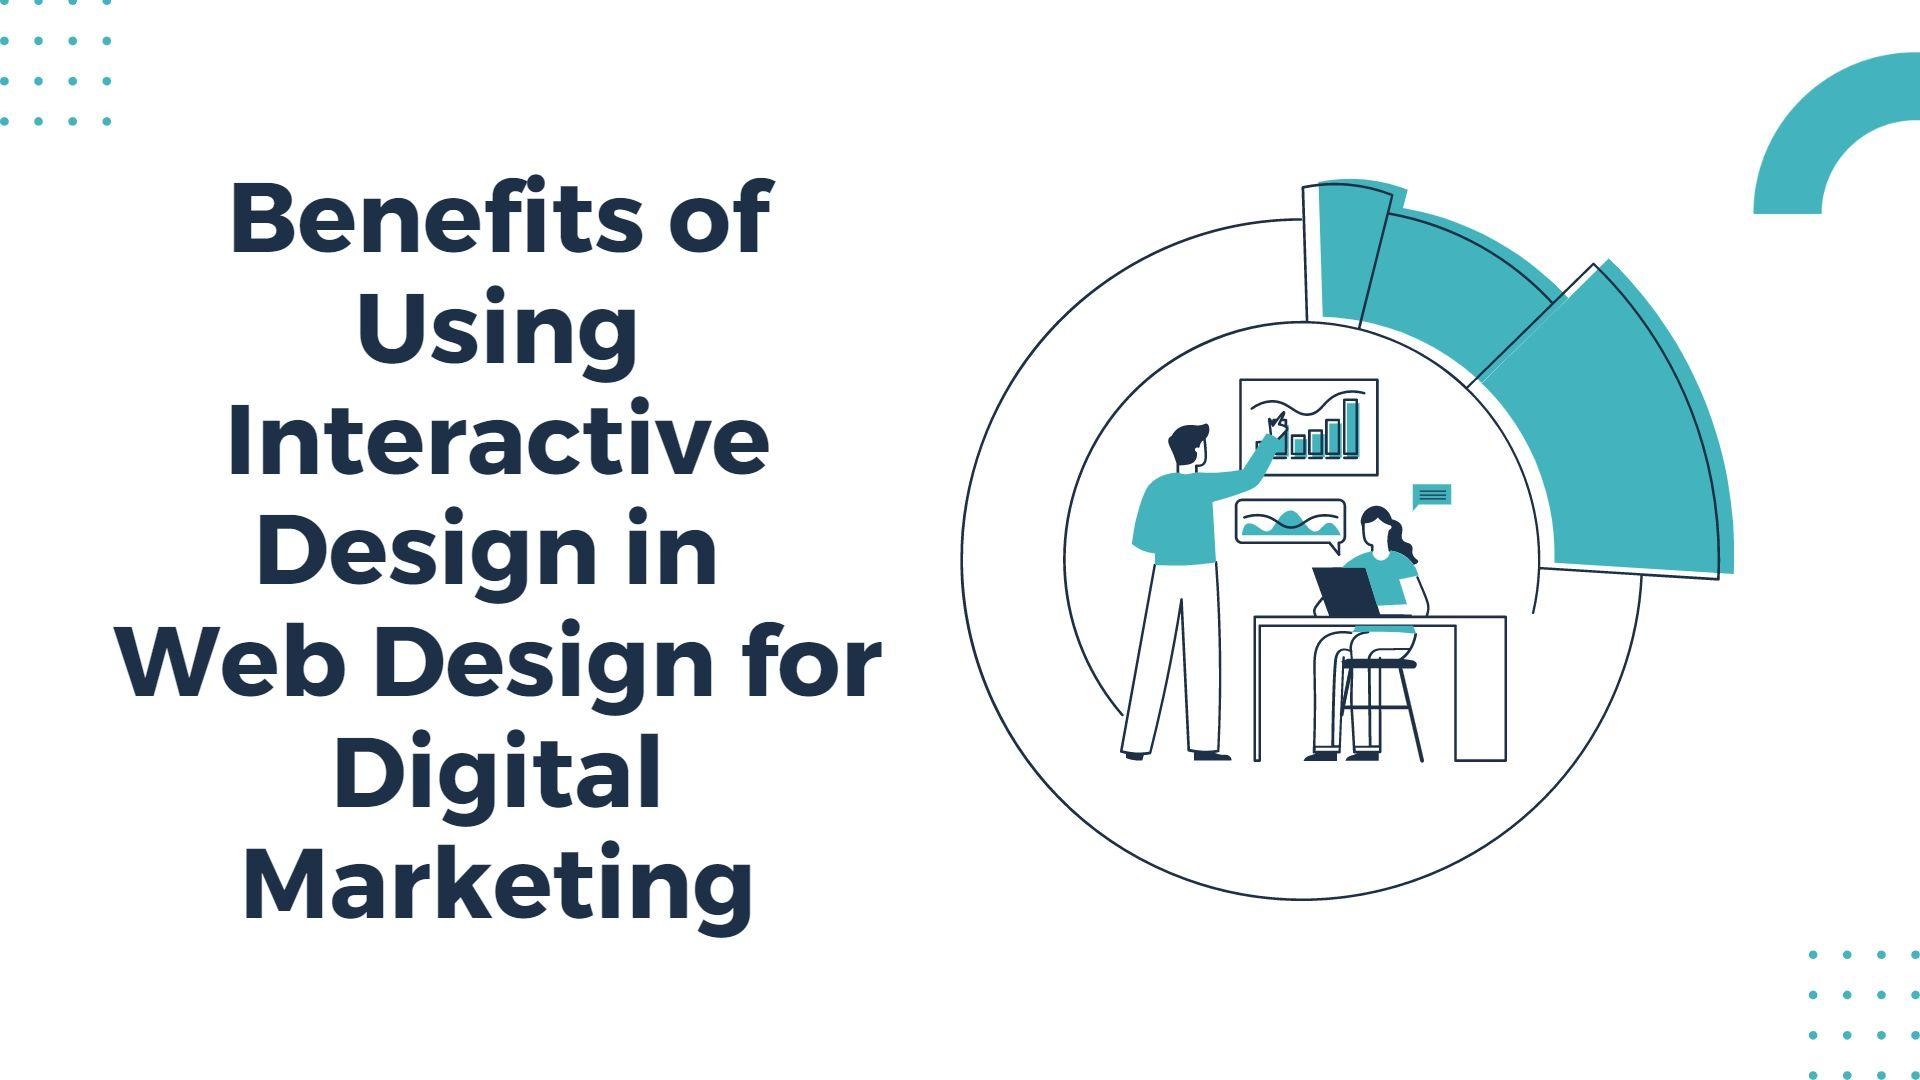 Benefits of Using Interactive Design in Web Design for Digital Marketing